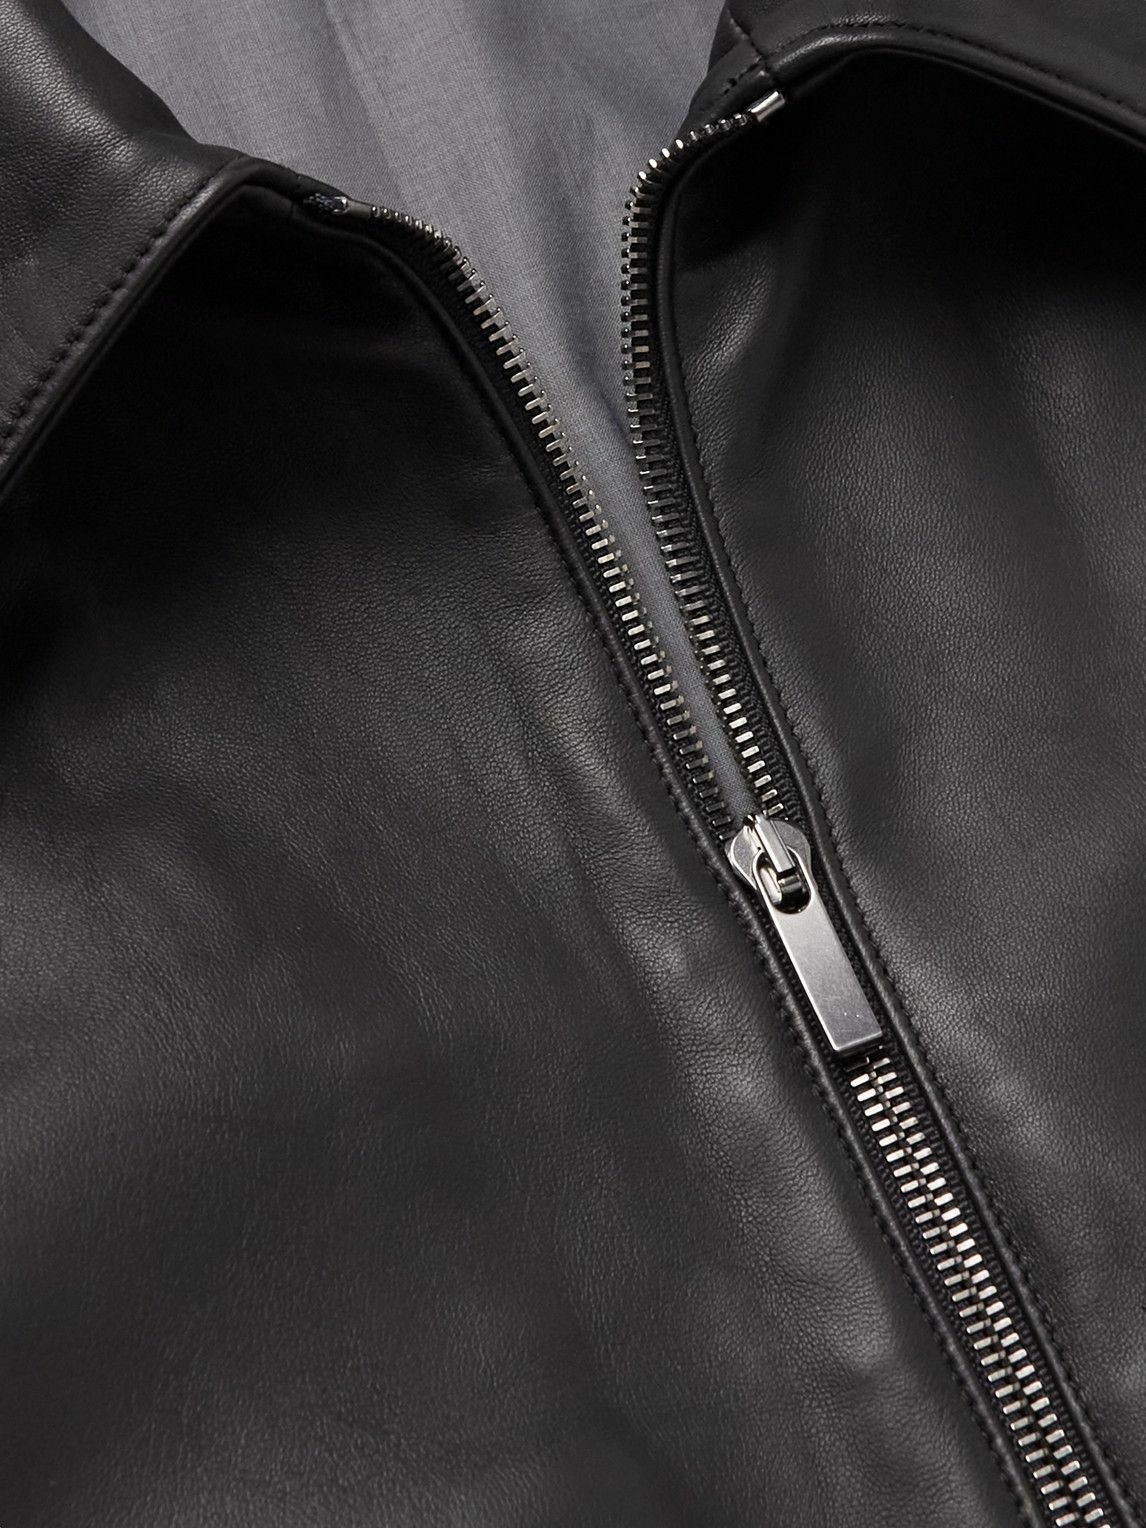 Stoffa - Throwing Fits Leather Flight Jacket - Black